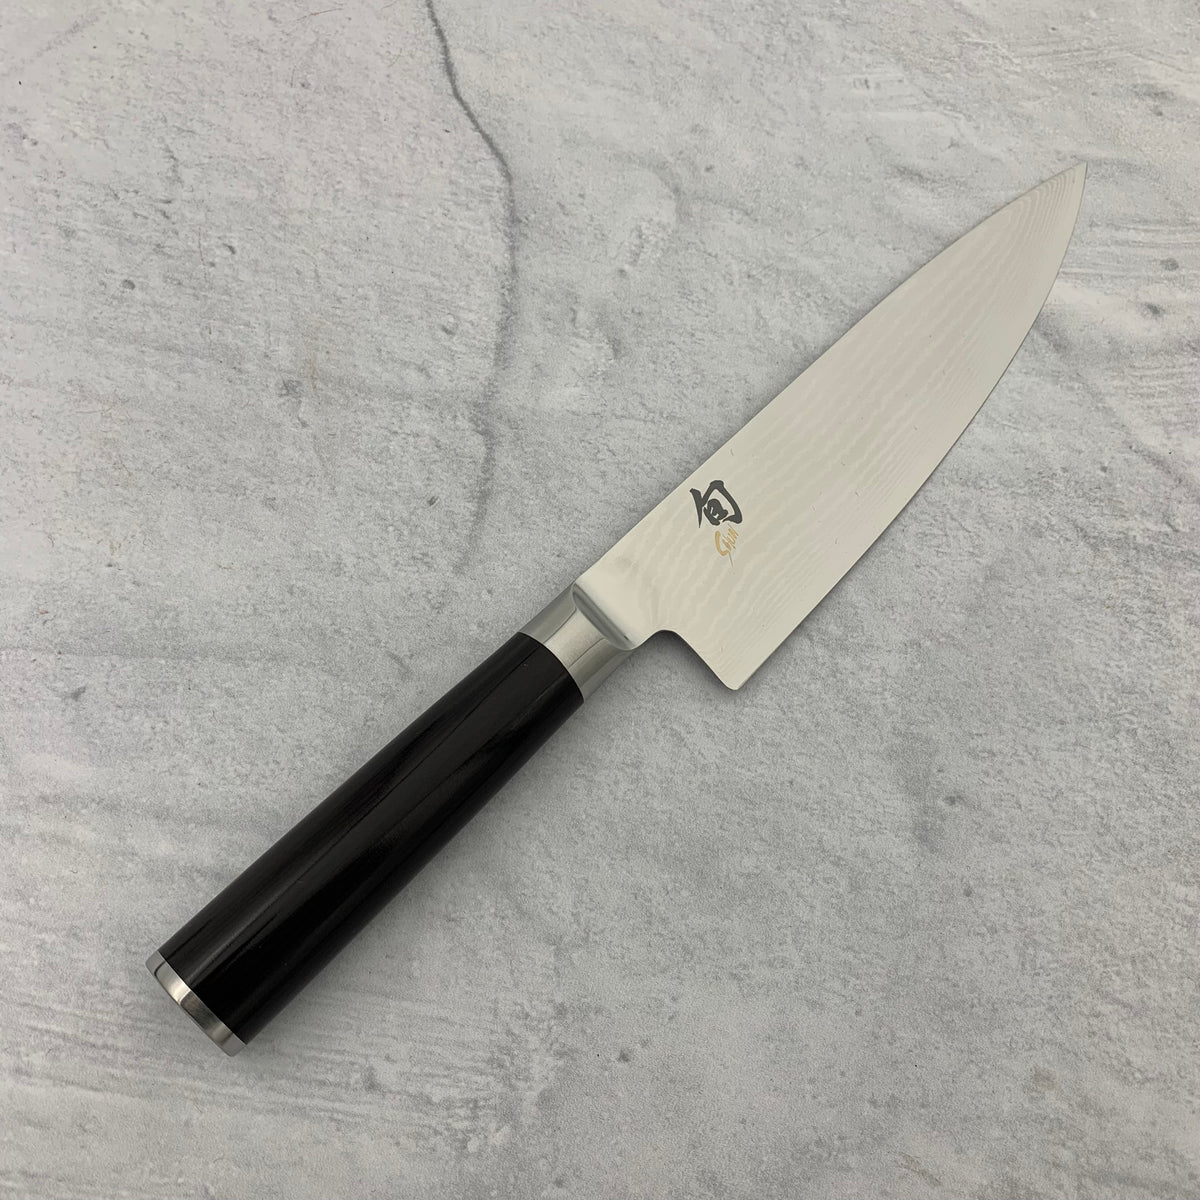 Kai Shun Classic Chef's Knife 200mm (7.8) #DM-0706– Knives for Chefs